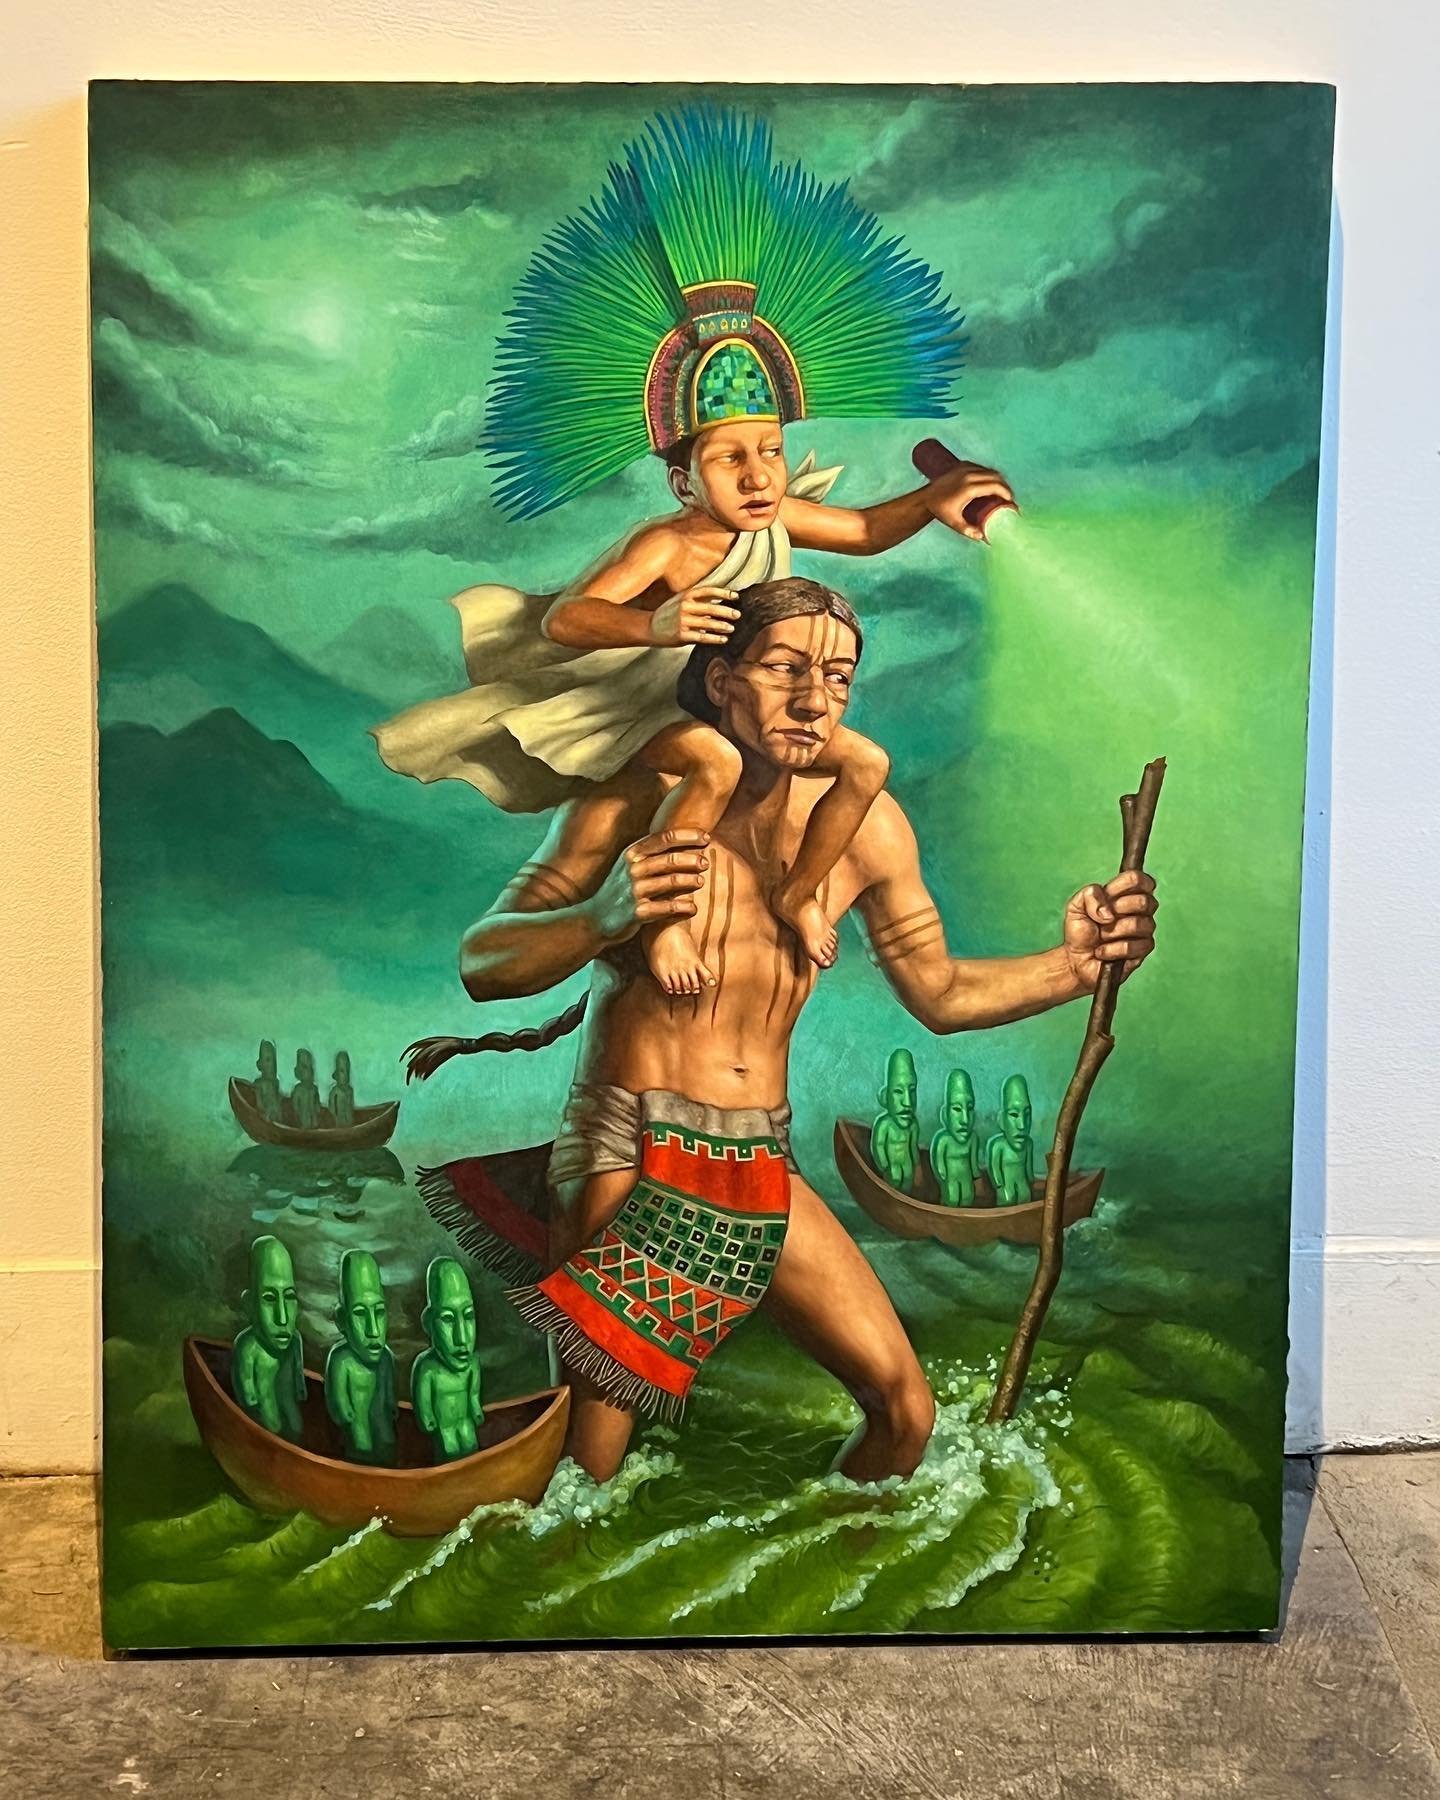 No True Mexican: Paintings by Peter Daniel Bernal